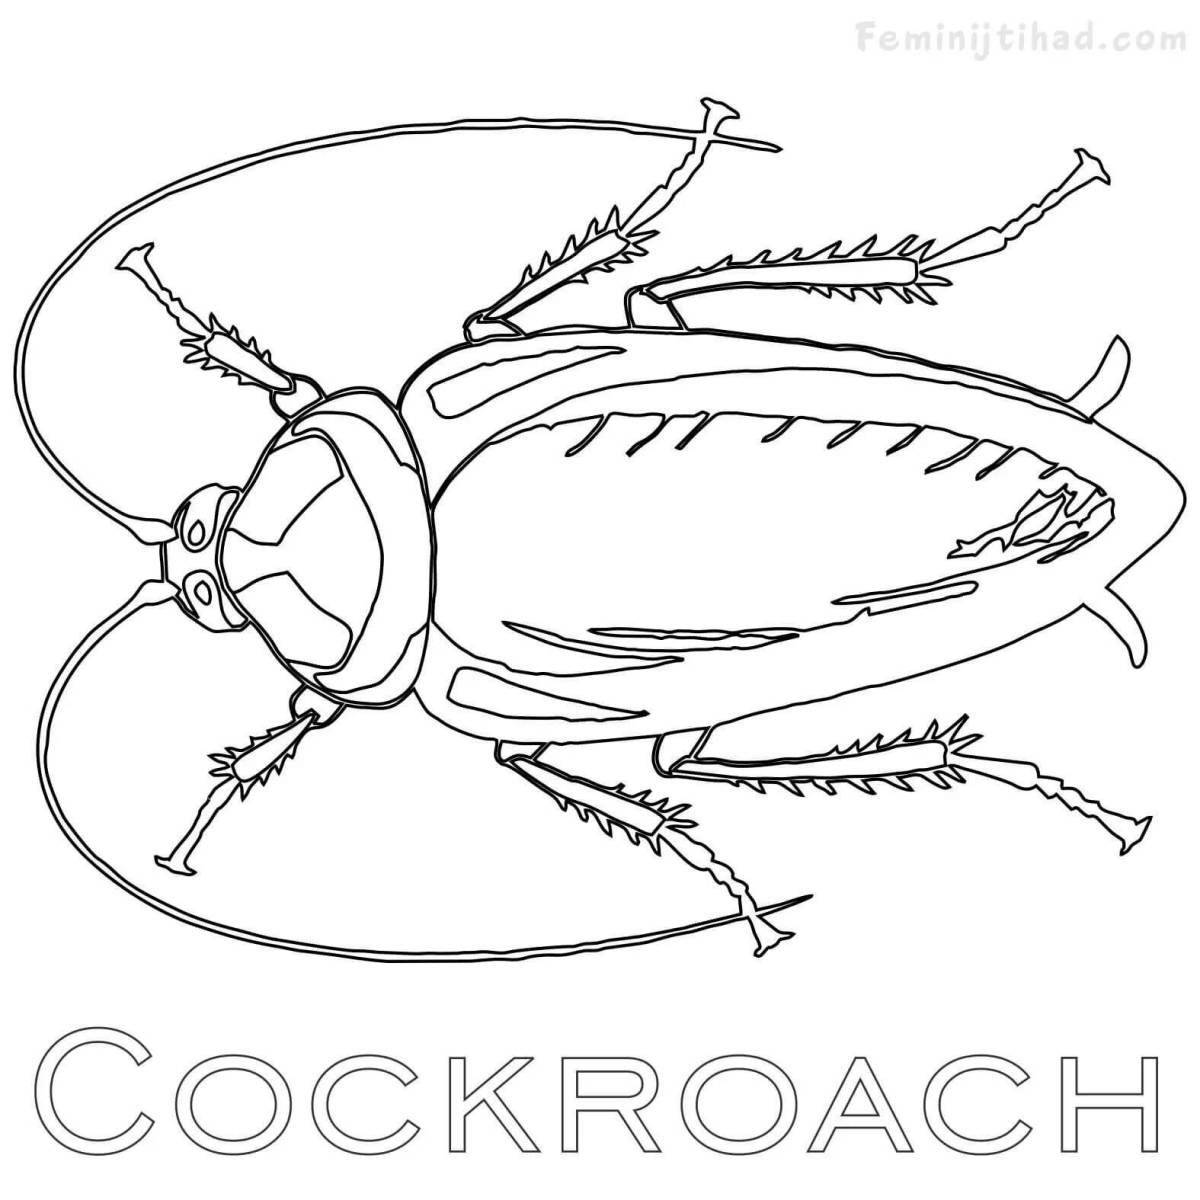 Cockroach for children #10